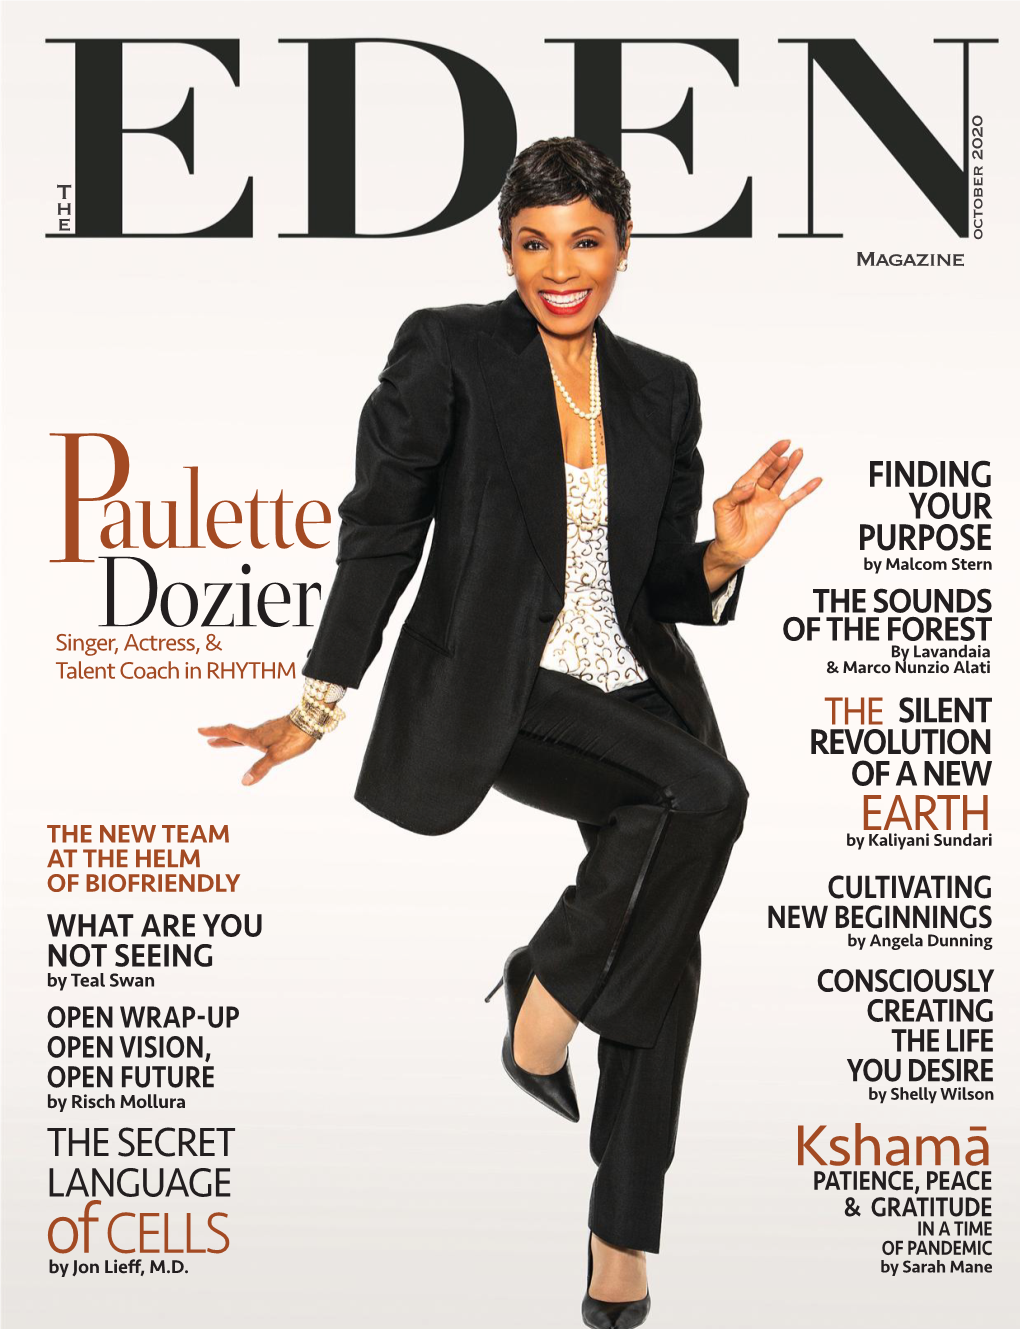 The Eden Magazine October 2020